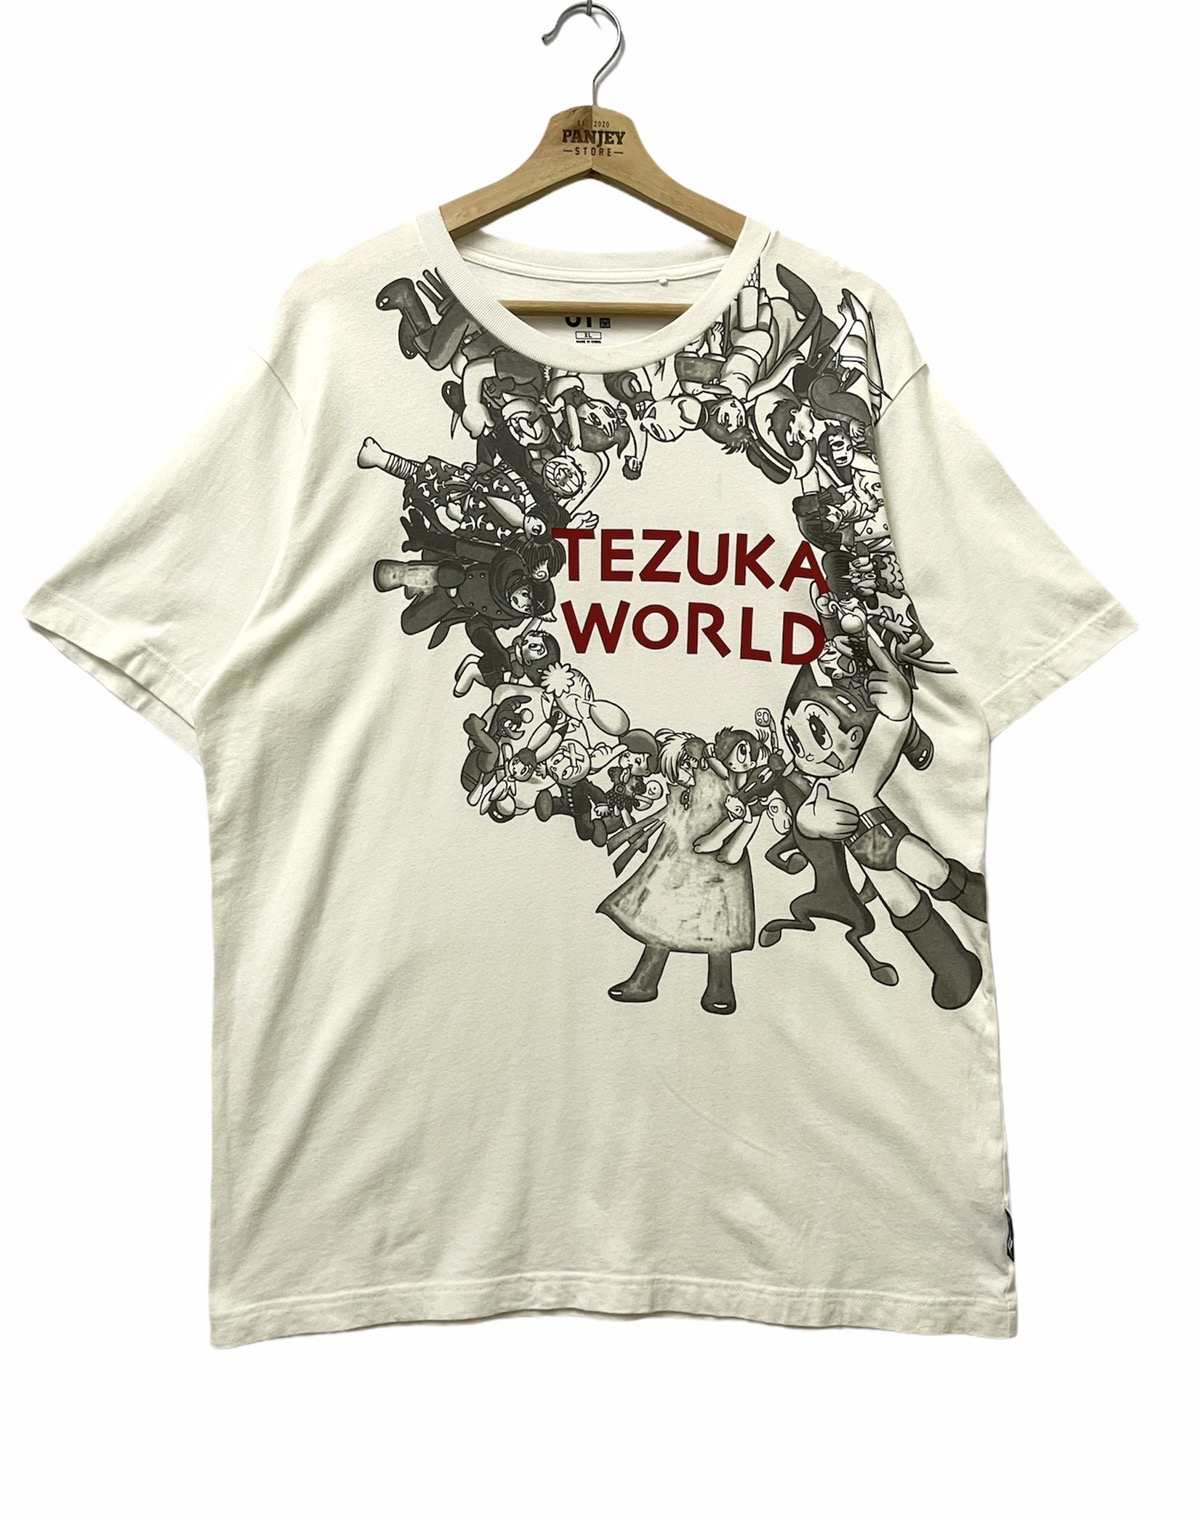 Tezuka Astro Boy, Shirts & Tops